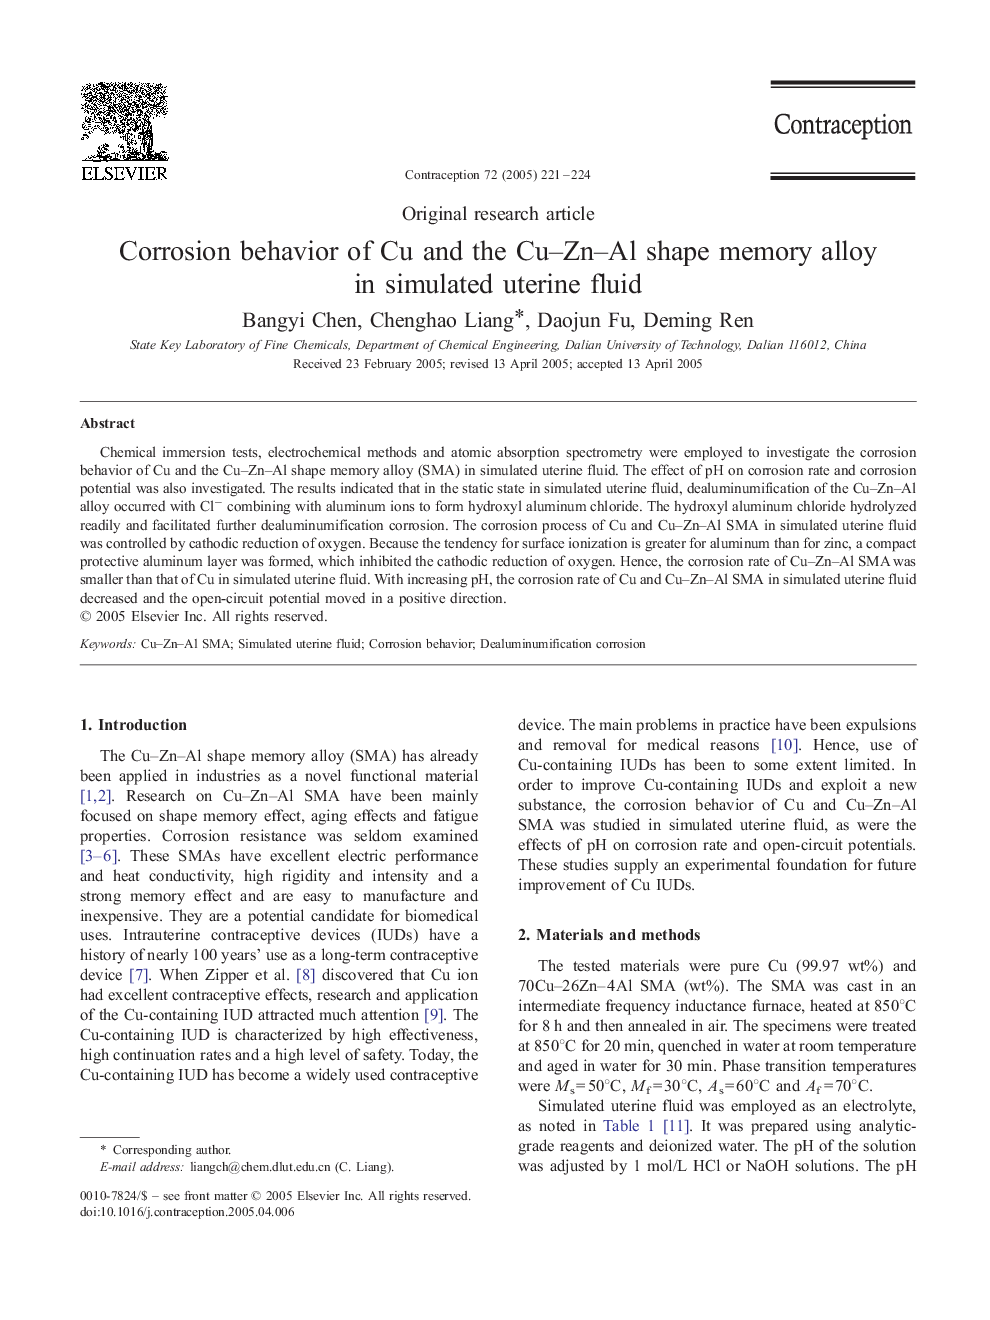 Corrosion behavior of Cu and the Cu-Zn-Al shape memory alloy in simulated uterine fluid